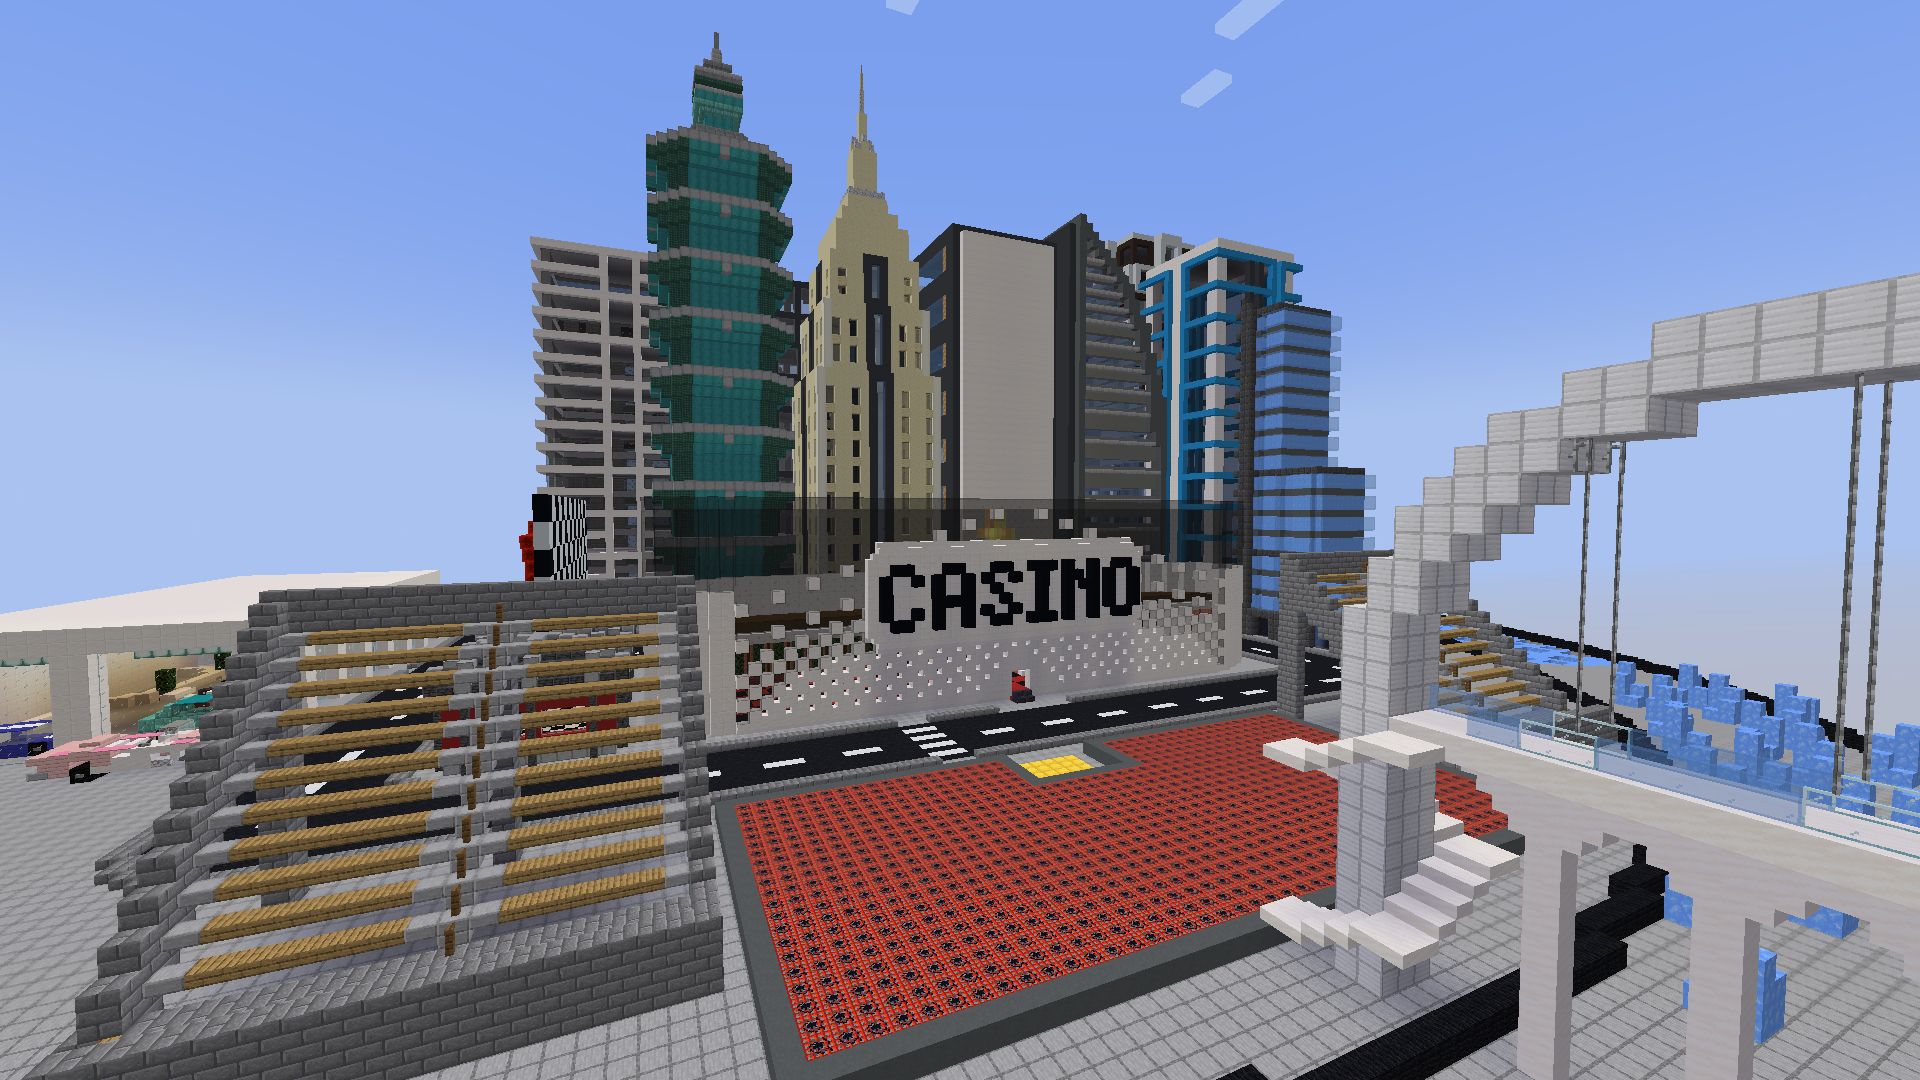 City island casino, spleef minigame and buildings